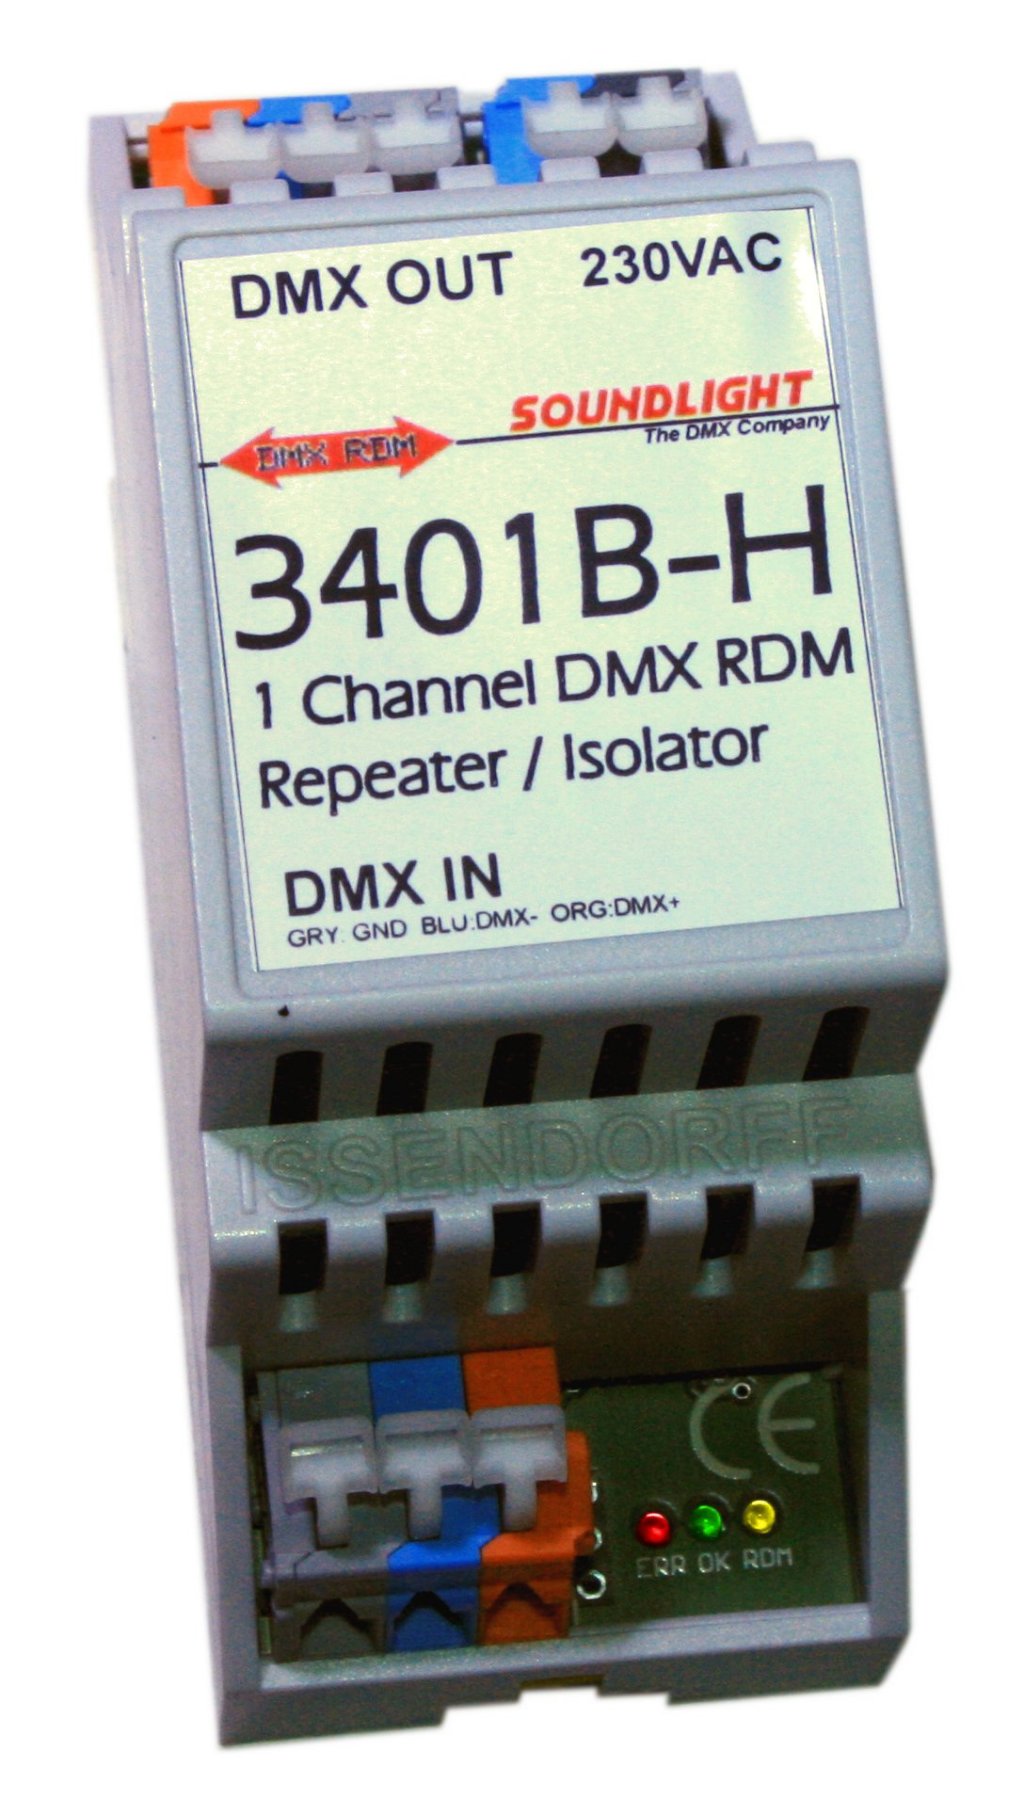 [DMX RDM LINE DRIVER 3401B-H]